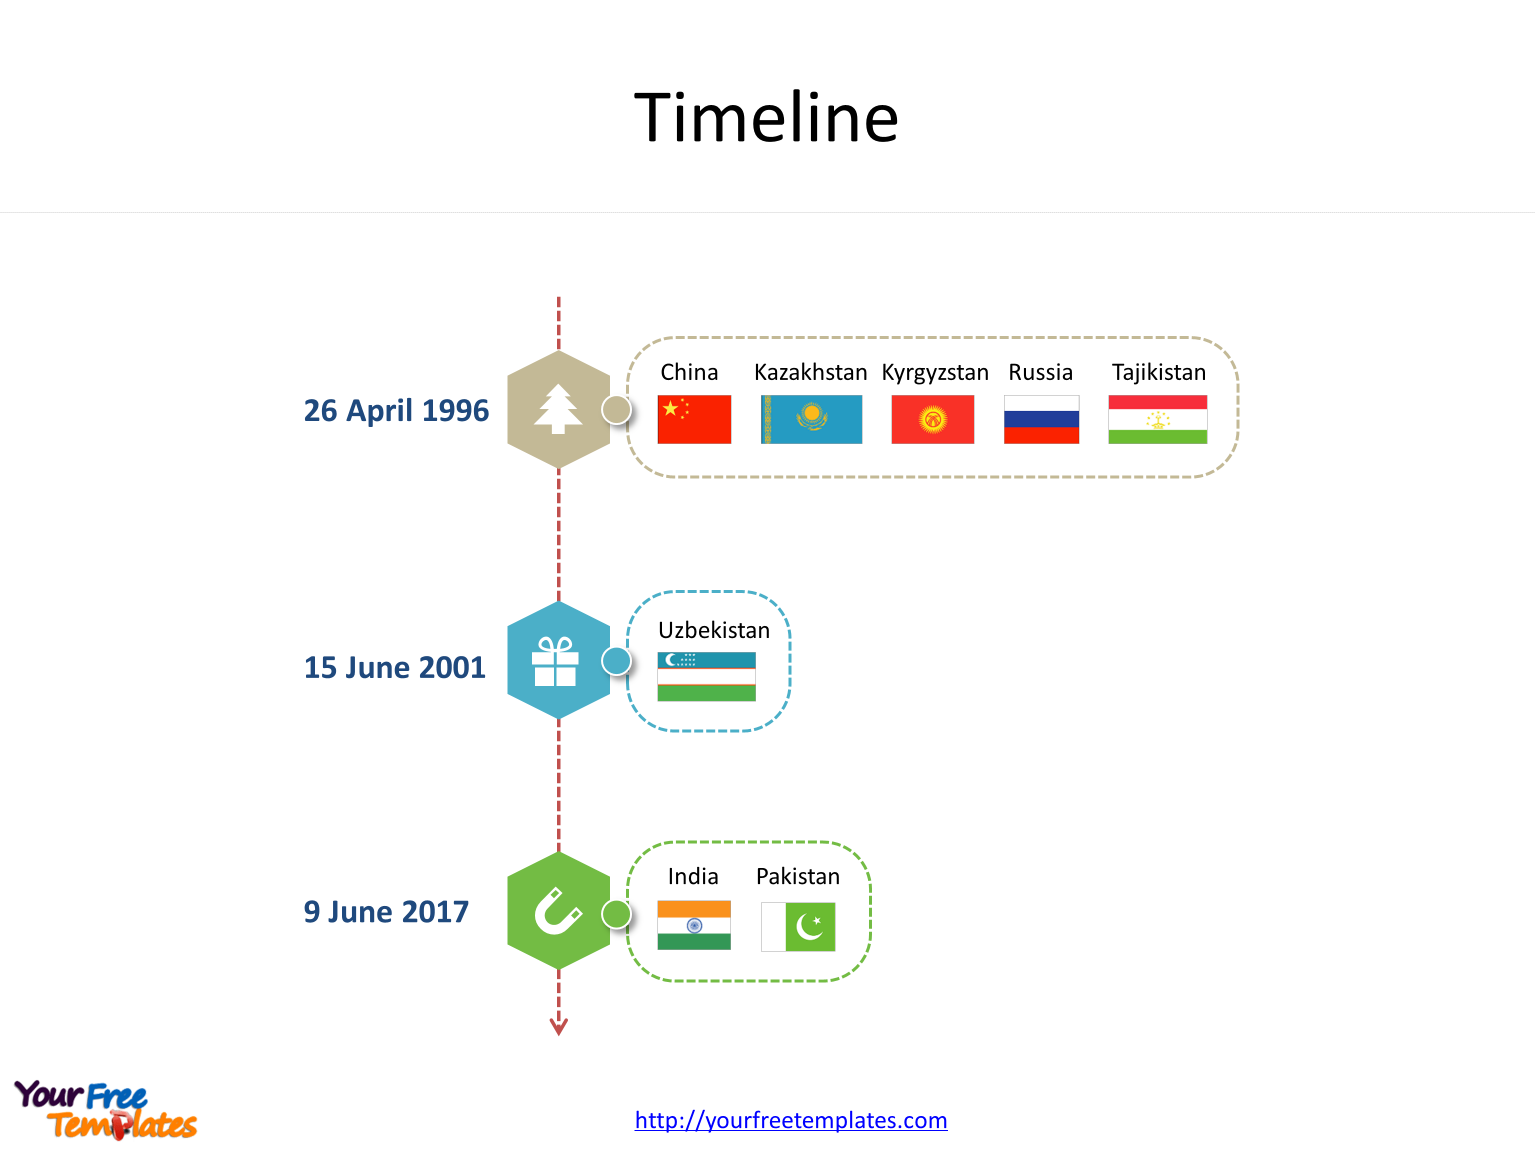 Shanghai Cooperation Organization (SCO) timeline member states timeline